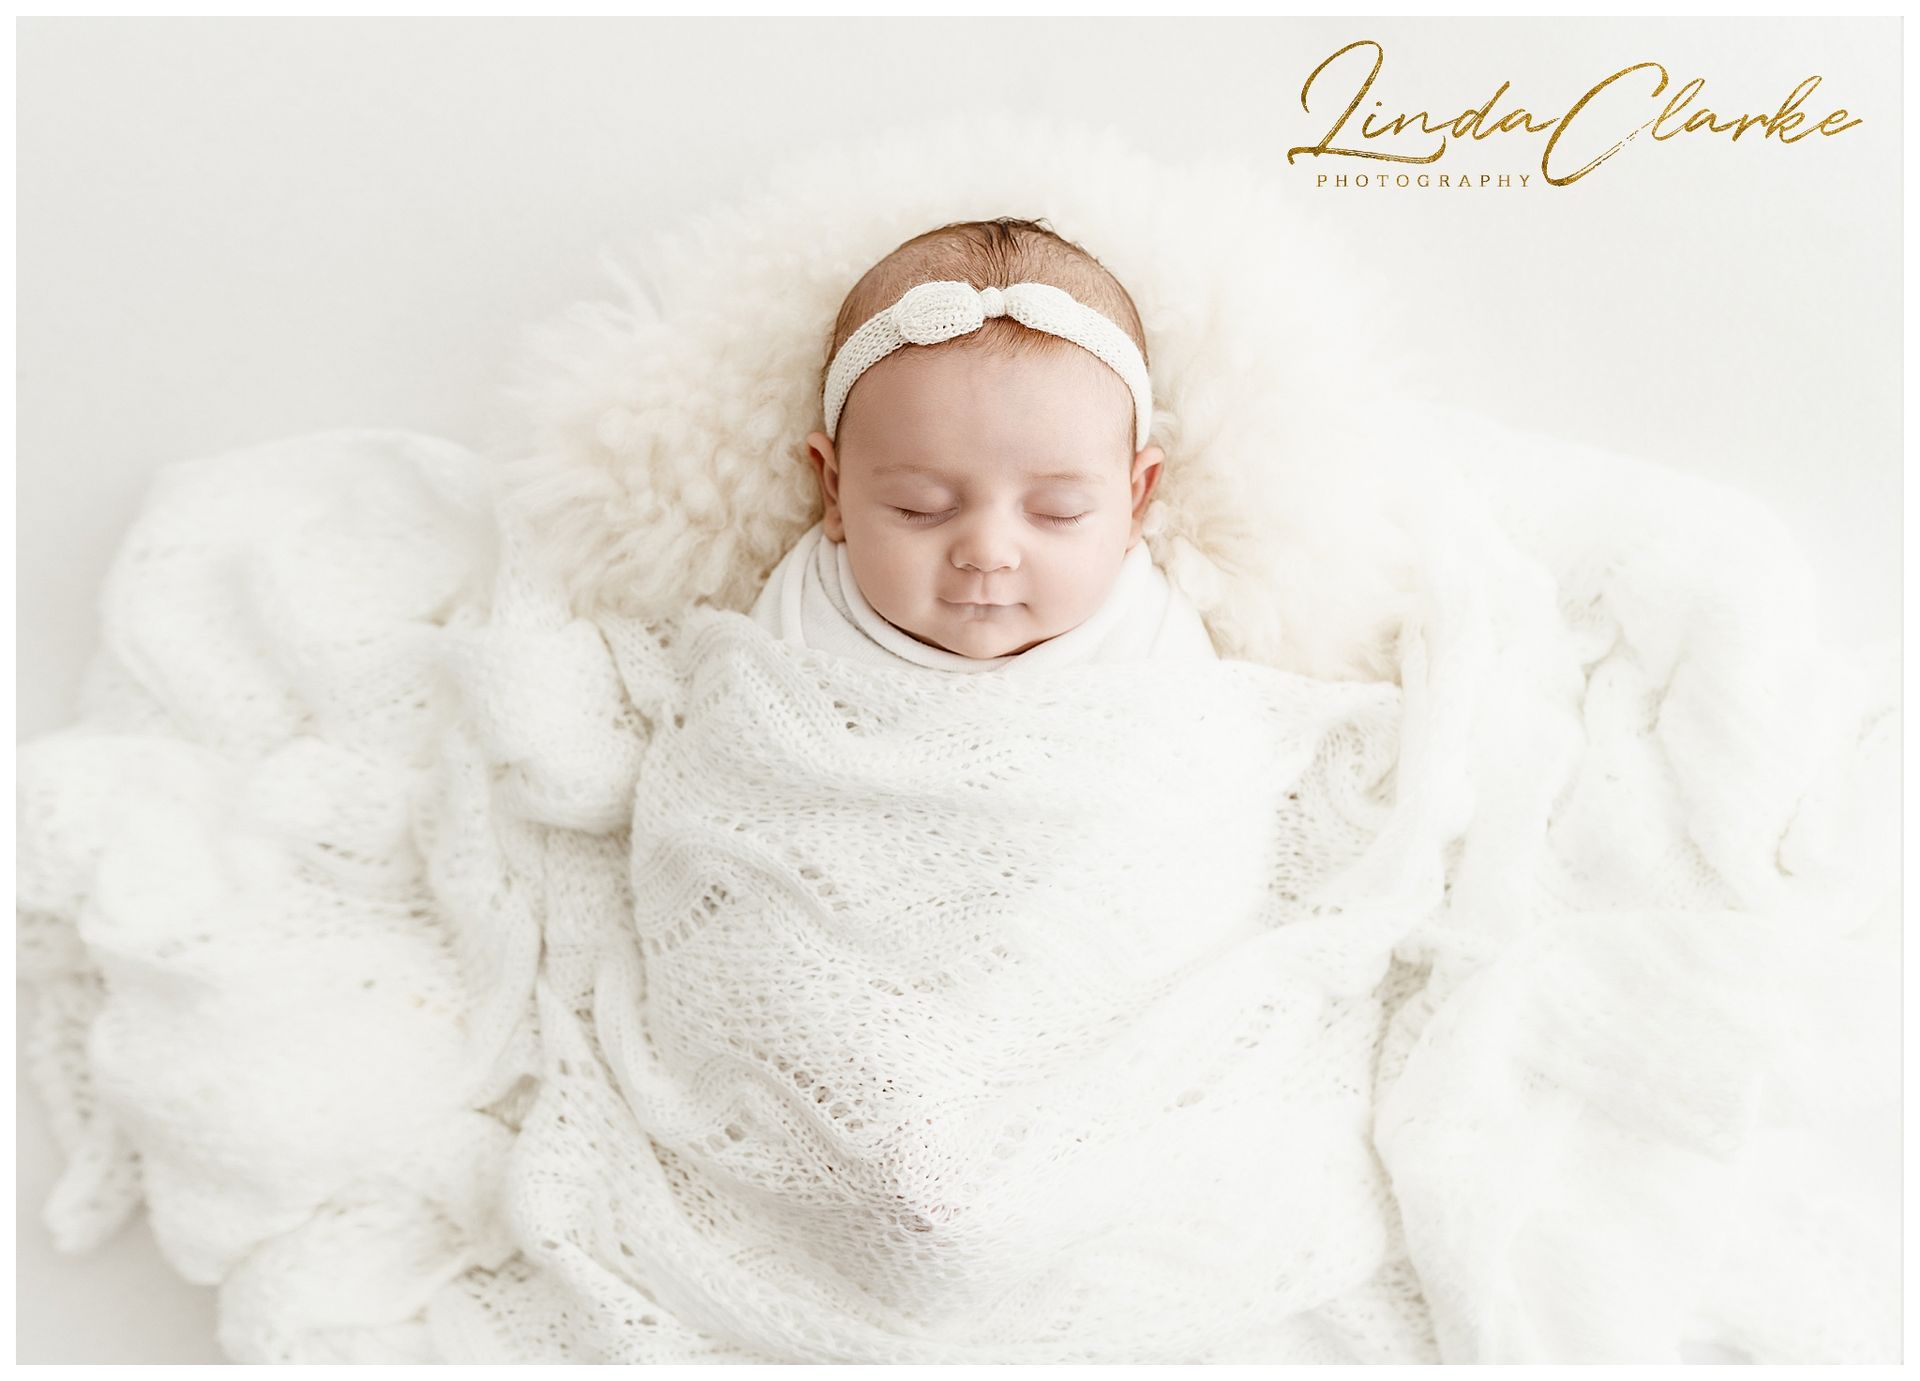 Newborn baby during a newborn photoshoot in dublin Ireland